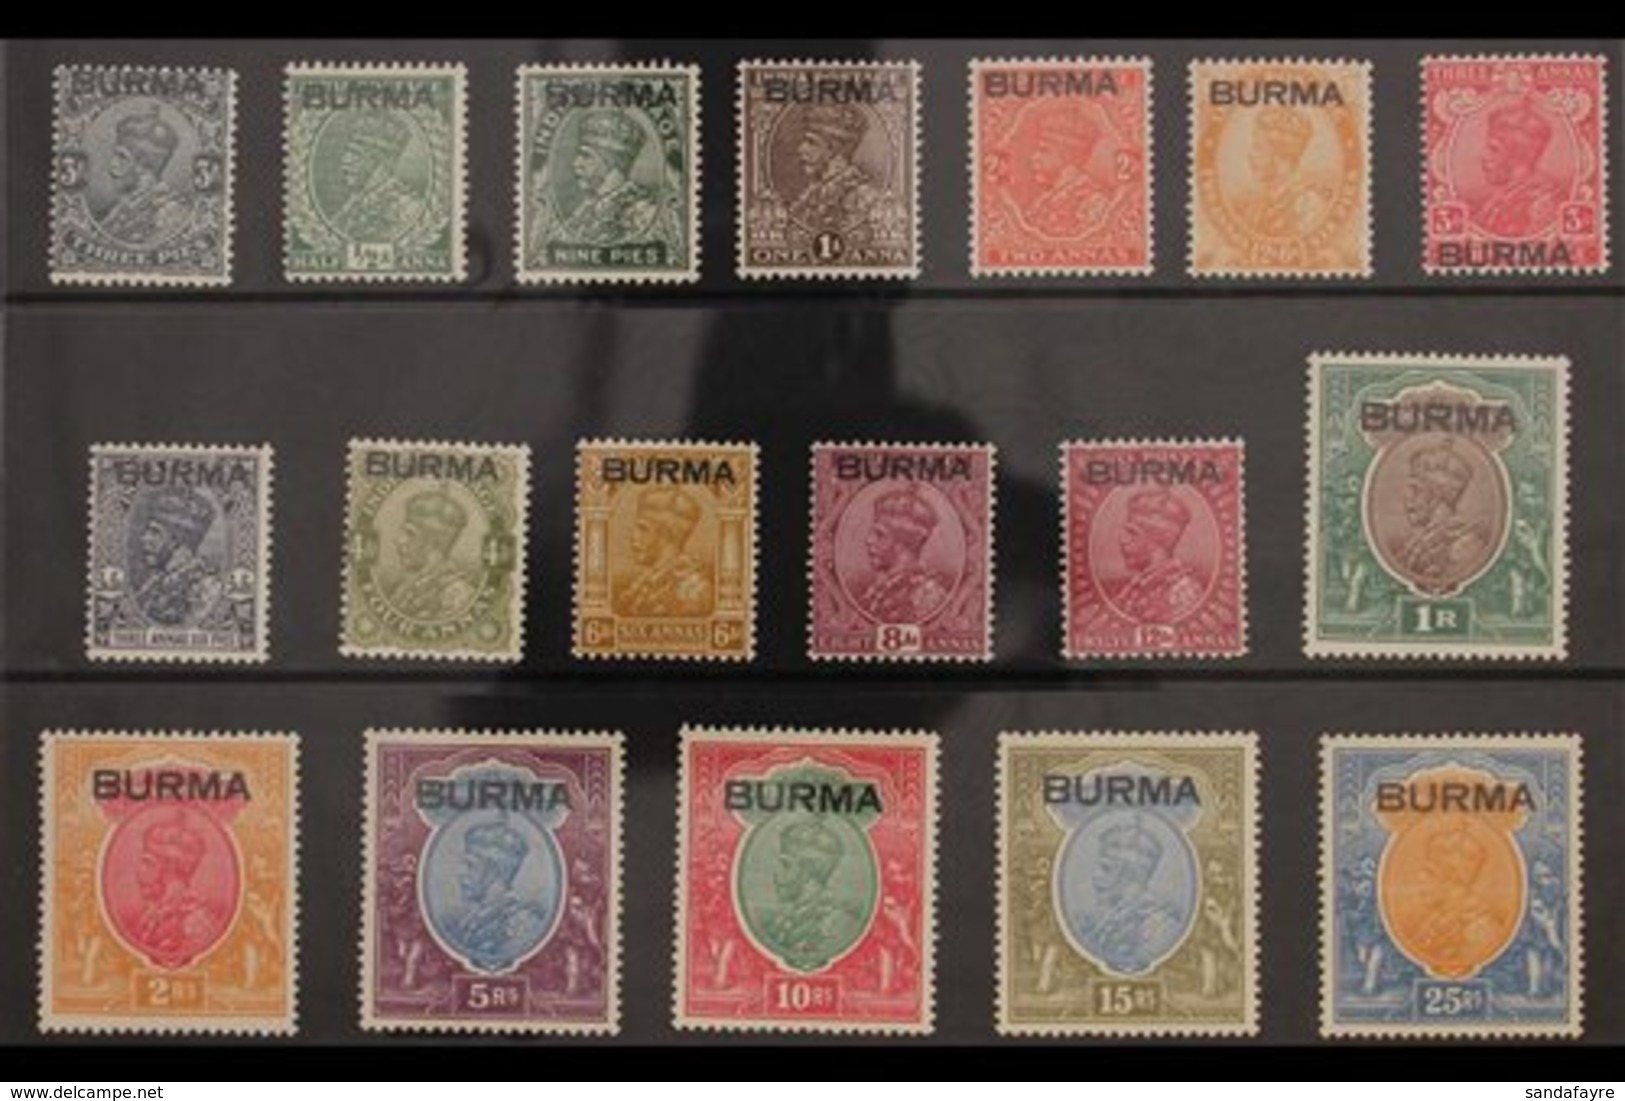 1937 (India KGV Overprinted) Complete Set, The 25R Watermark Inverted, SG 1/18aw, Very Fine Lightly Hinged Mint. Splendi - Birma (...-1947)